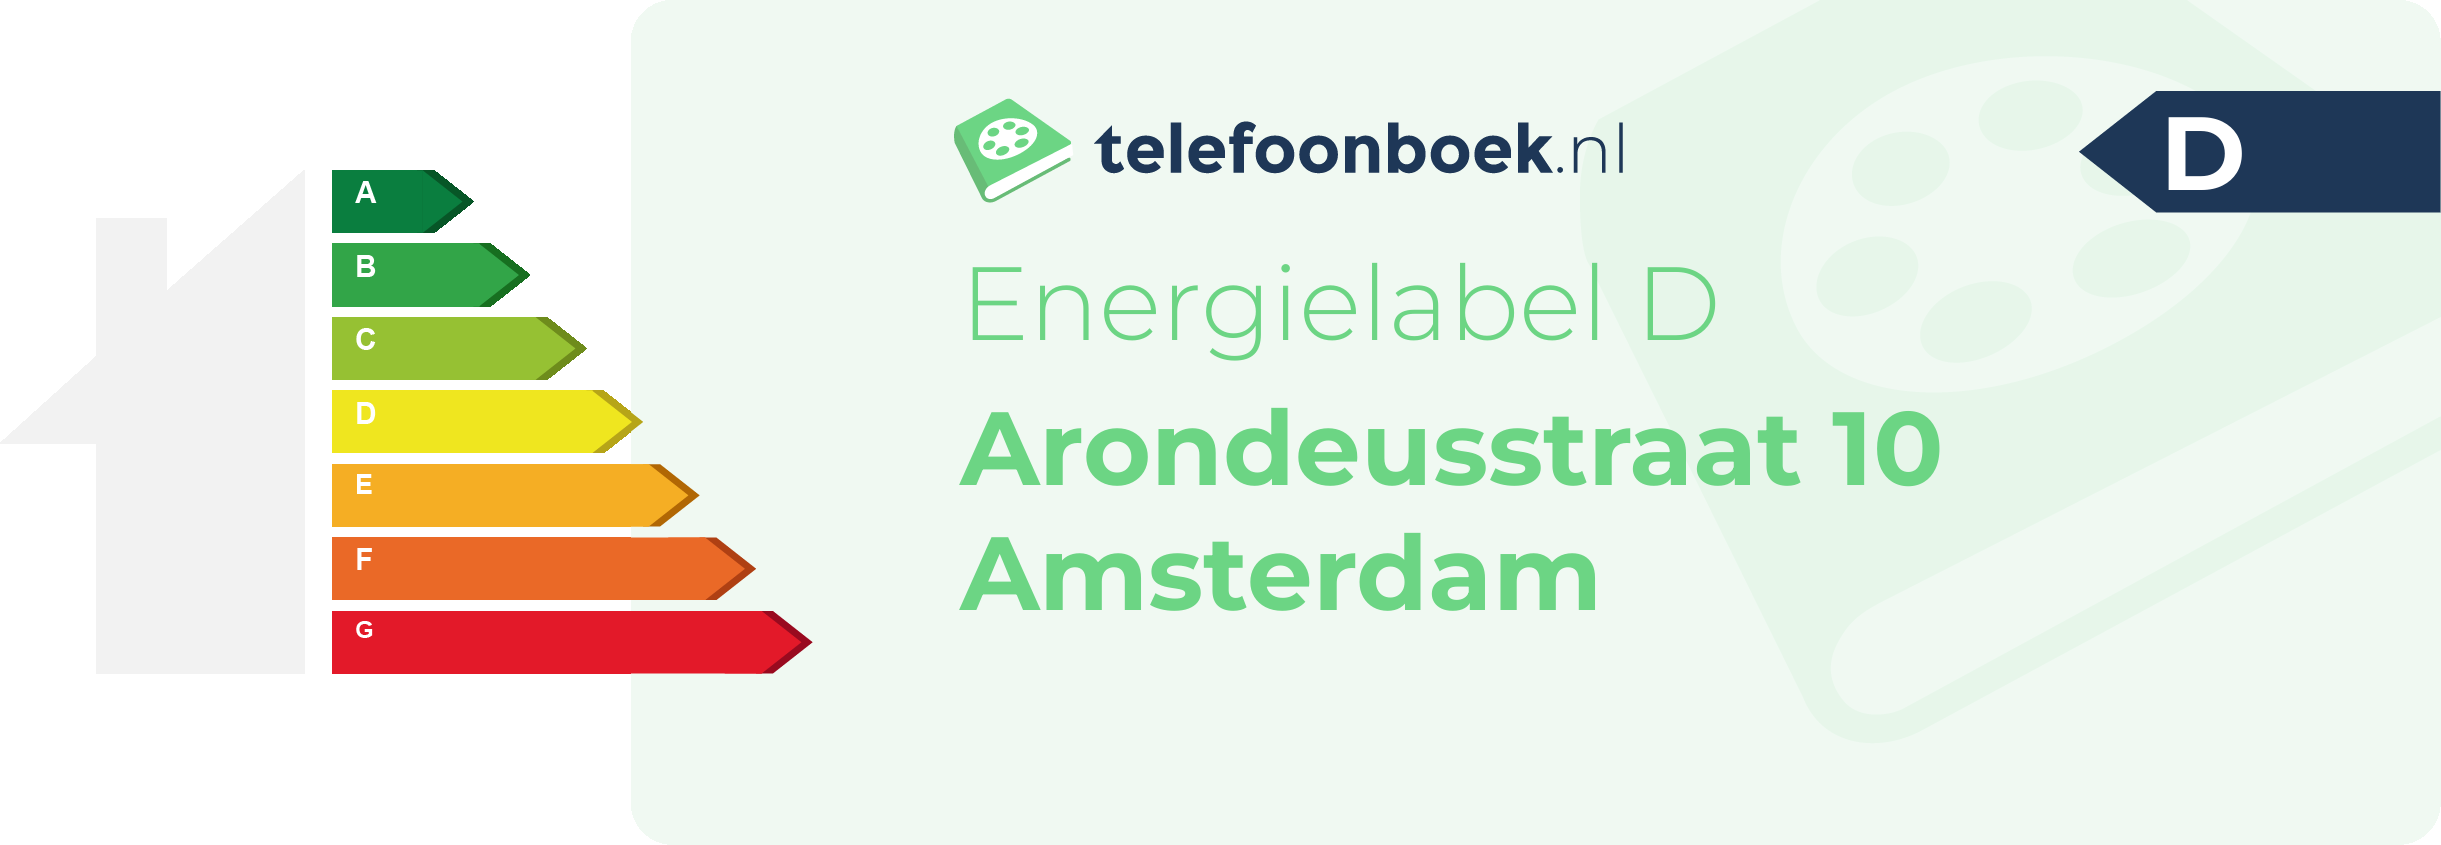 Energielabel Arondeusstraat 10 Amsterdam